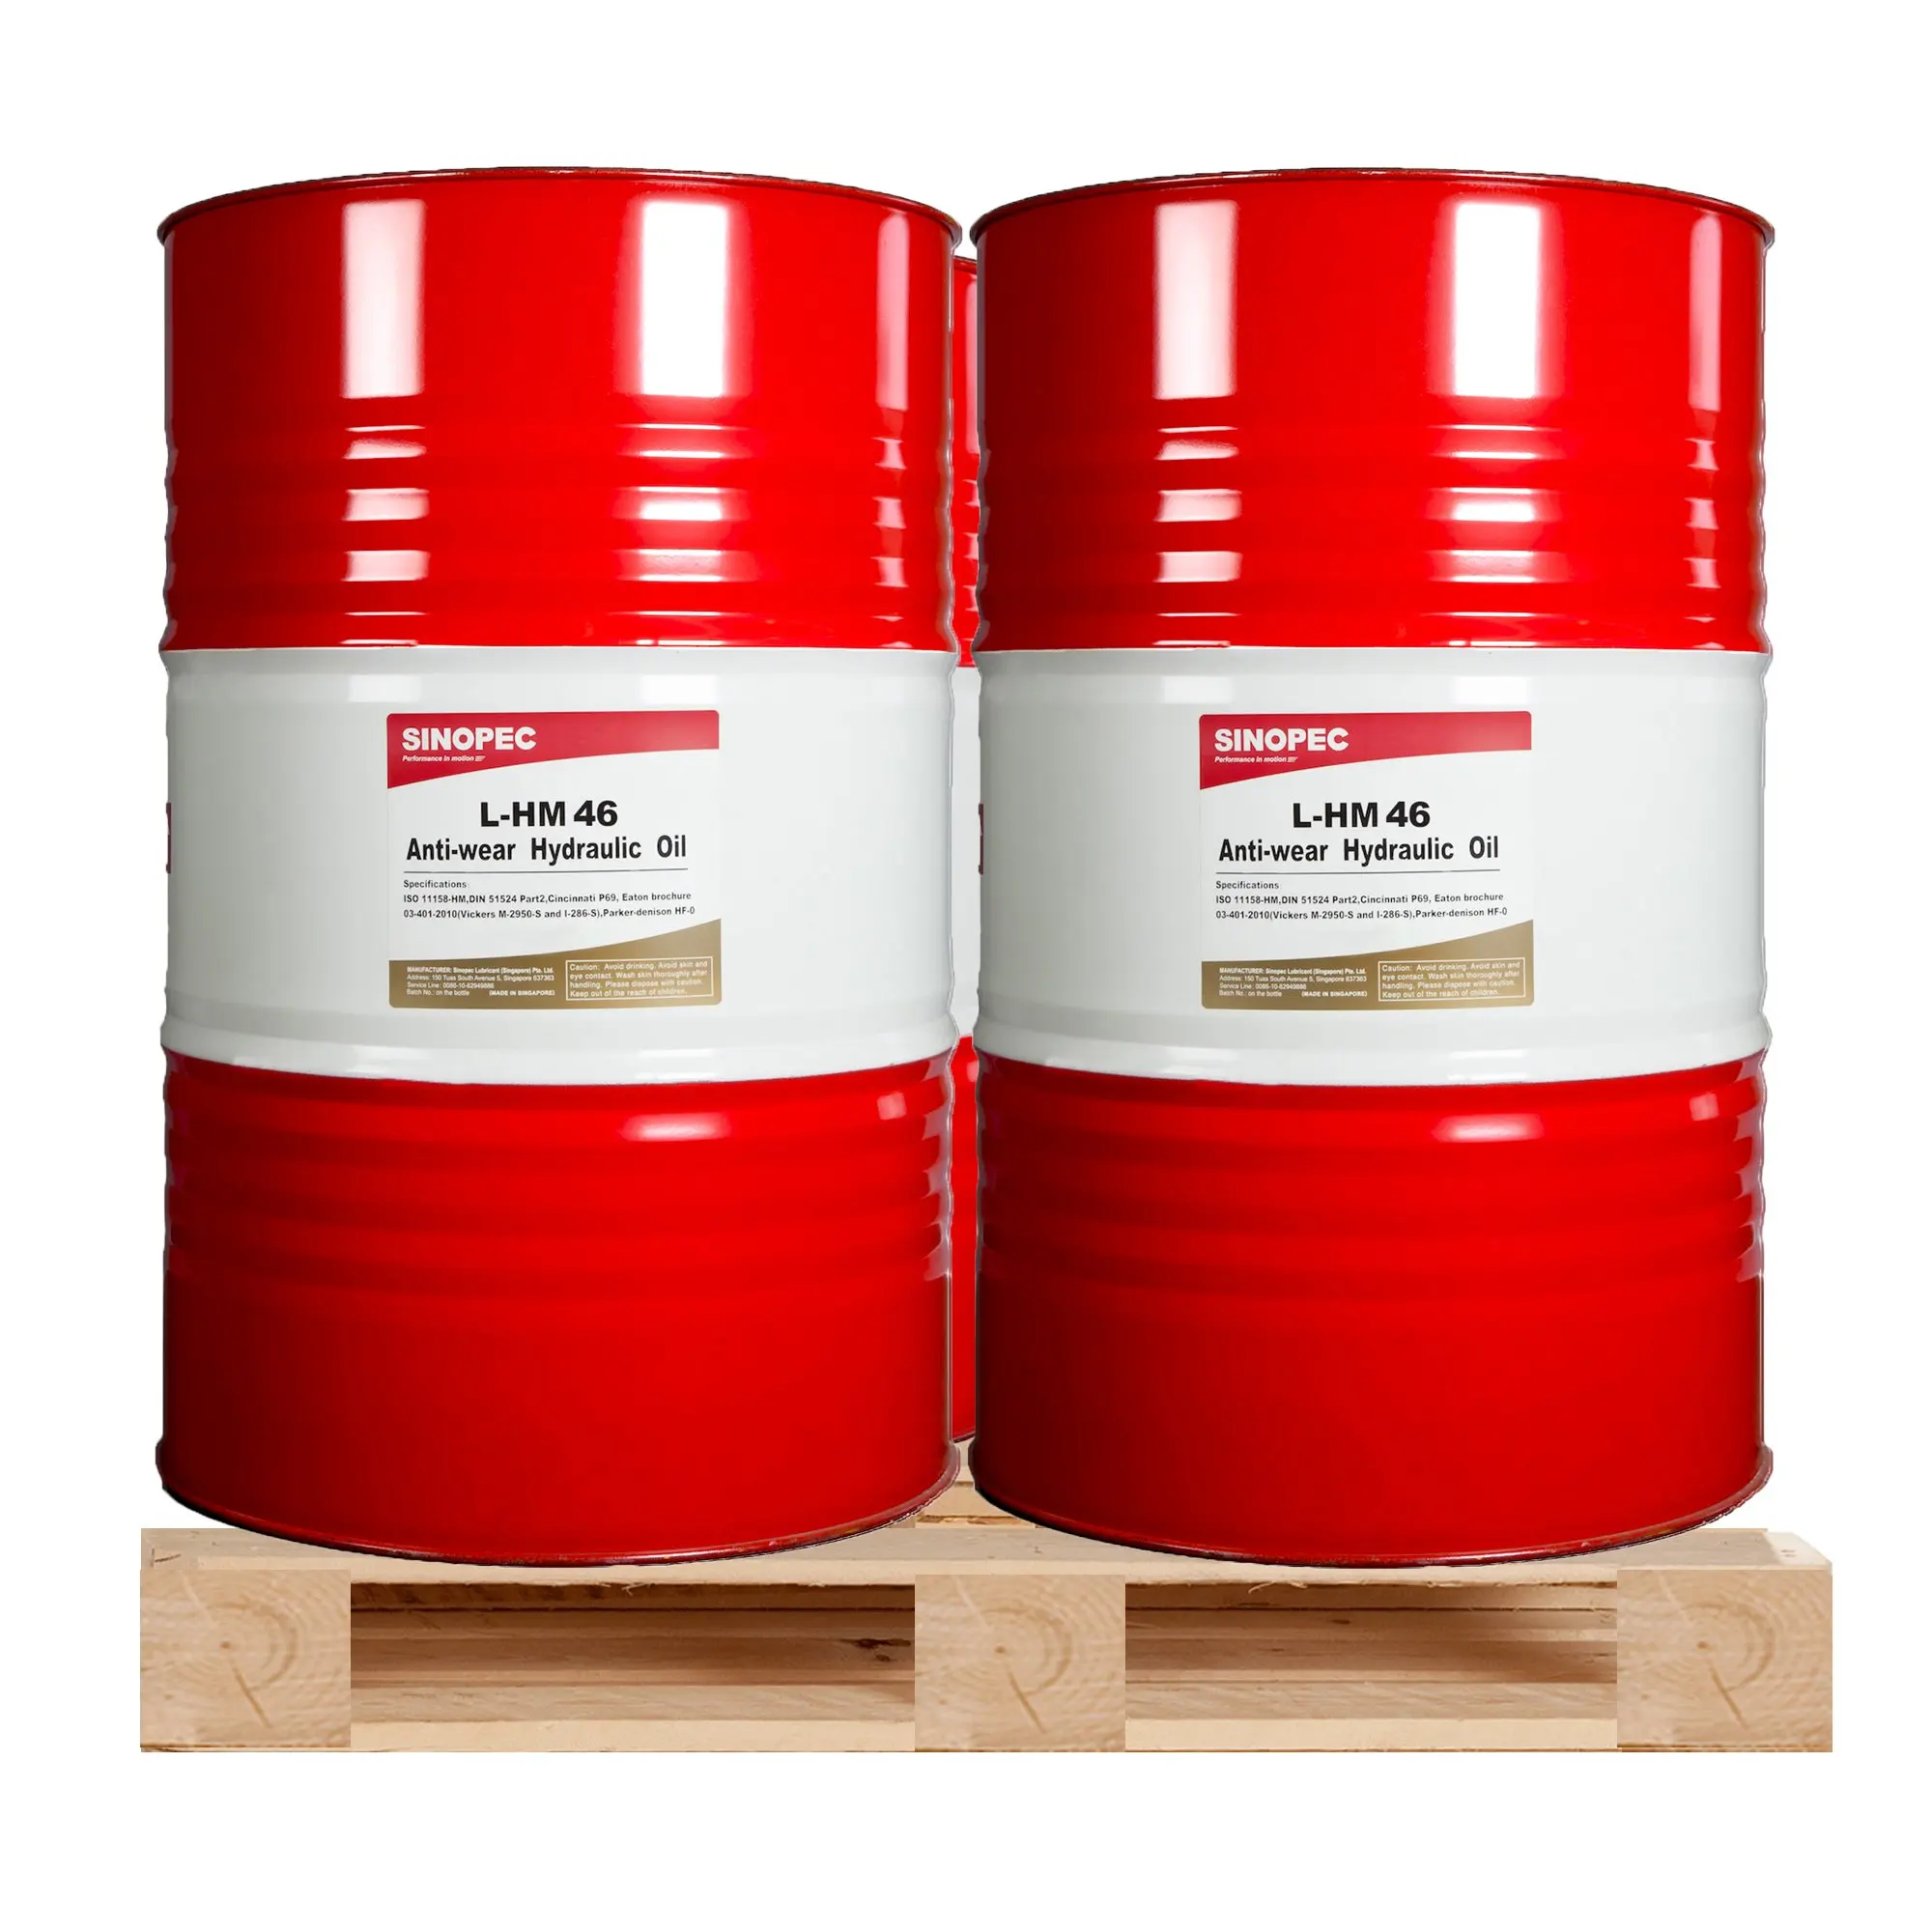 Гидравлическое масло лукойл 46. Vg46 масло Hydraulic Oil. ISO VG 32 масло. AW 46 Hydraulic Oil. Масло гидравлическое ISO VG 46.